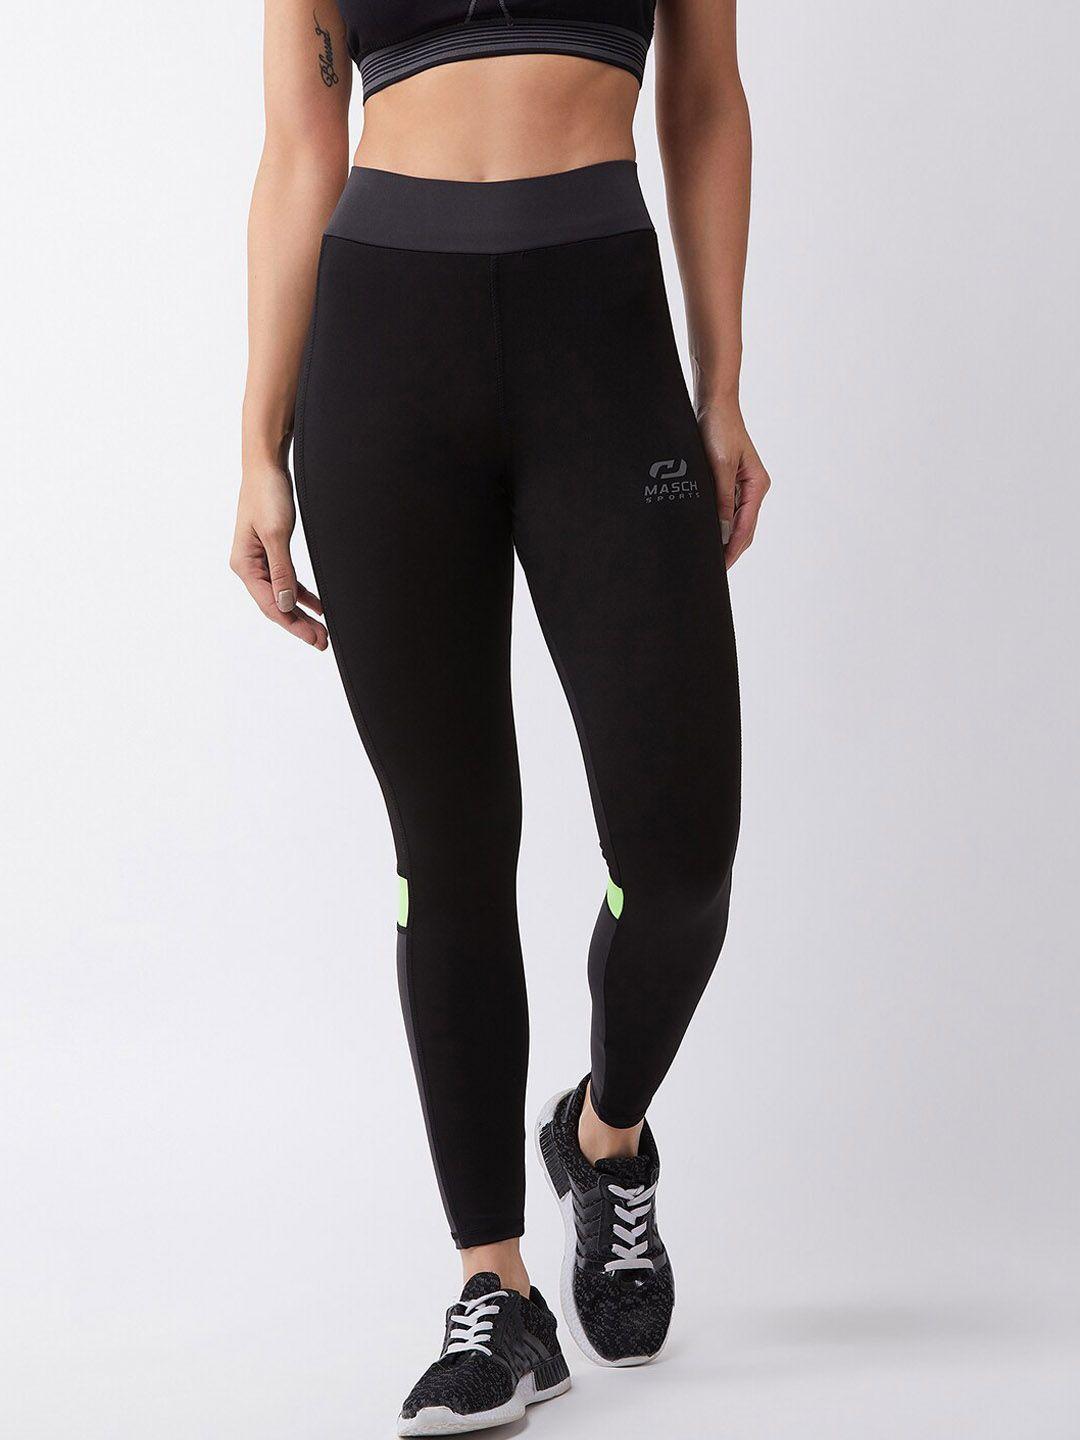 masch sports women black & neon green colourblocked dri-fit training tights